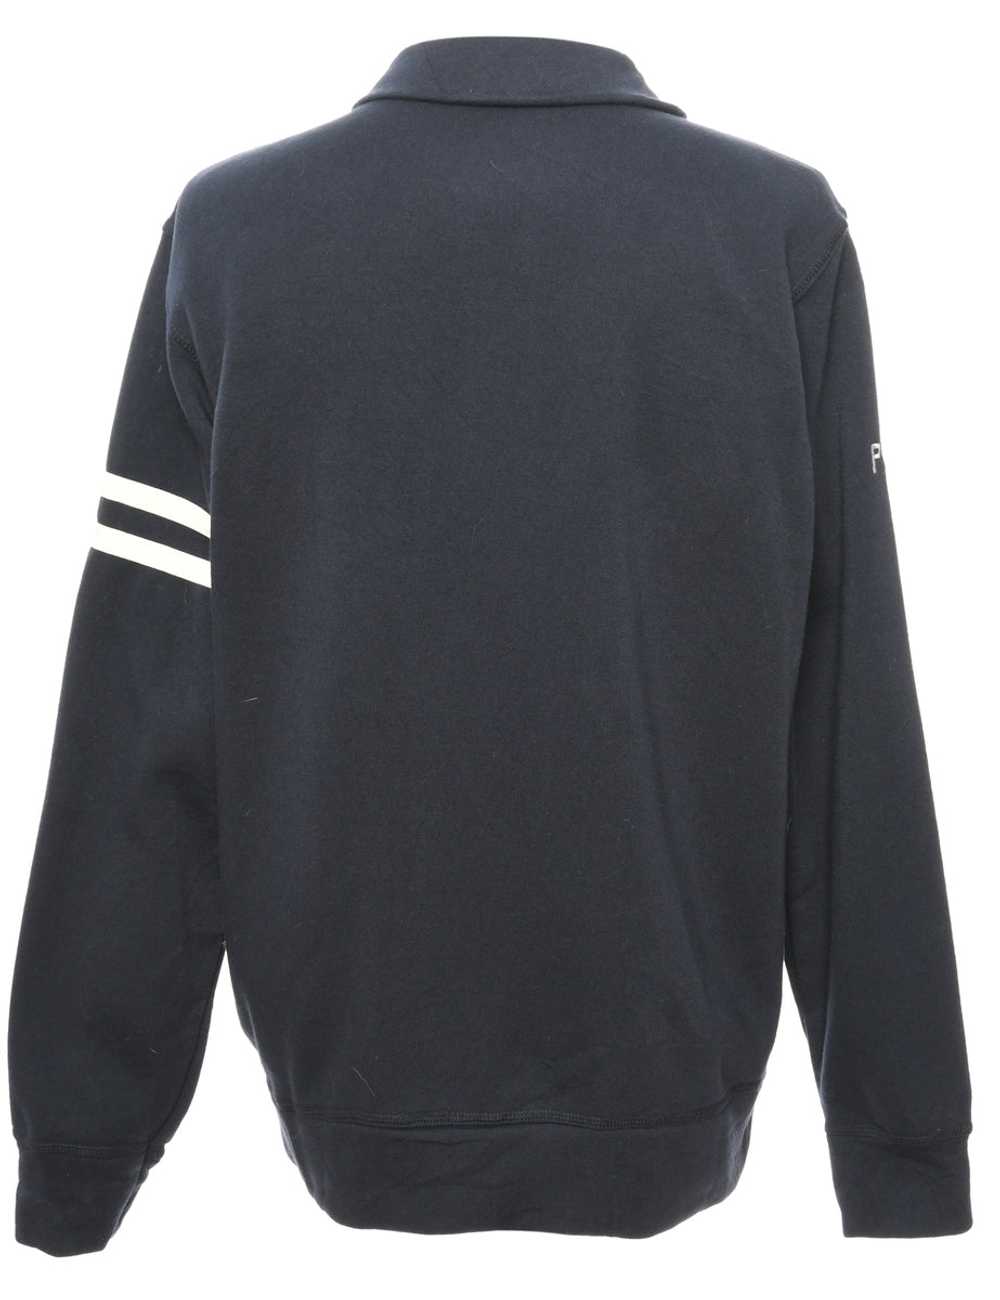 Plain Navy Sweatshirt - L - image 2